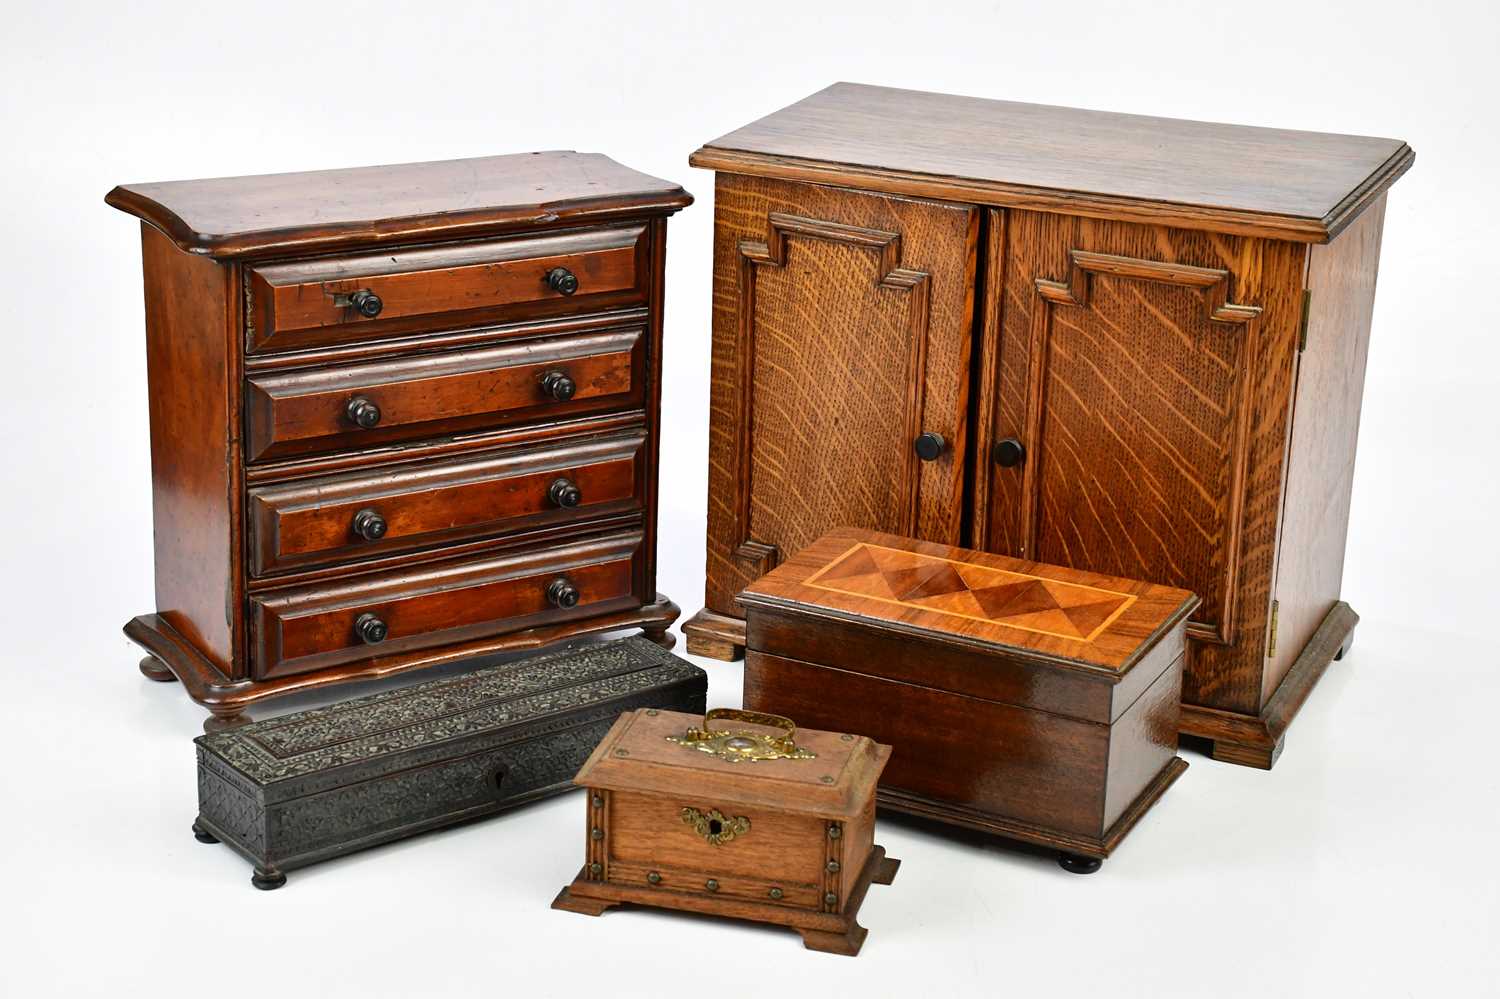 A Victorian specimen chest of four drawers on bun feet, height 28cm, width 29cm, depth 12cm, a 1920s